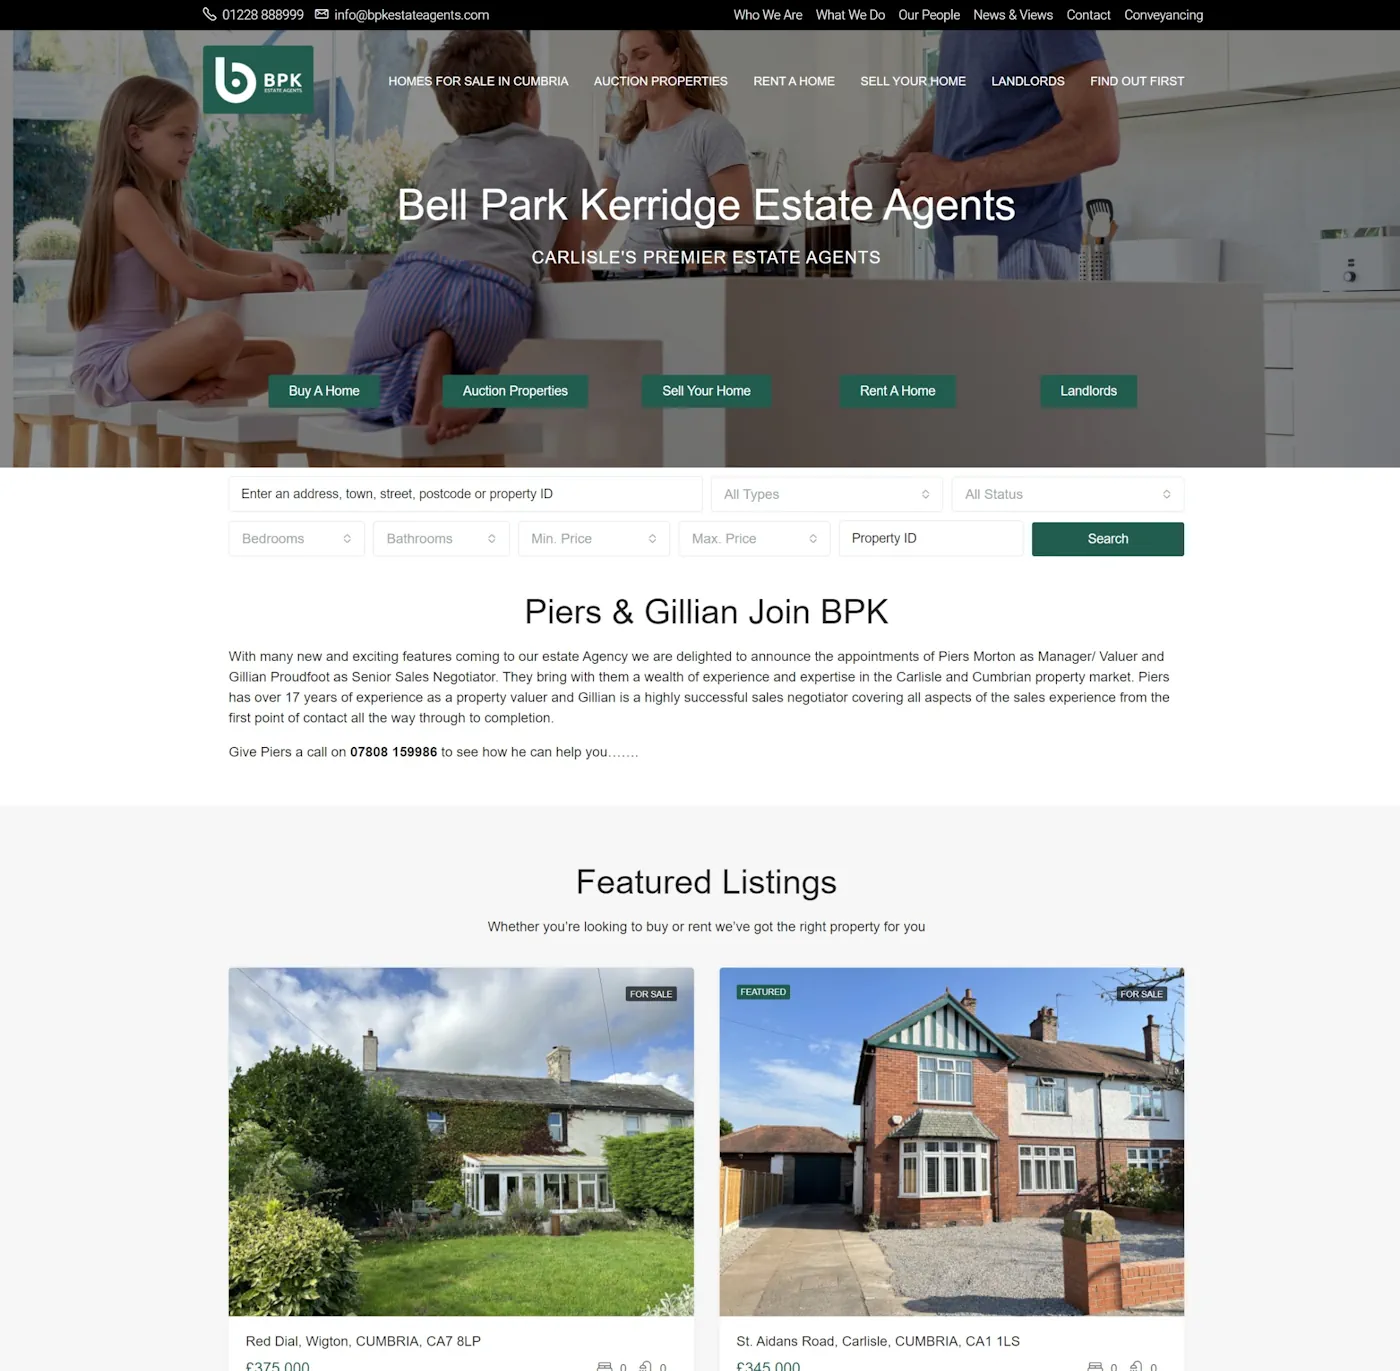 The BPK Estate Agents original website